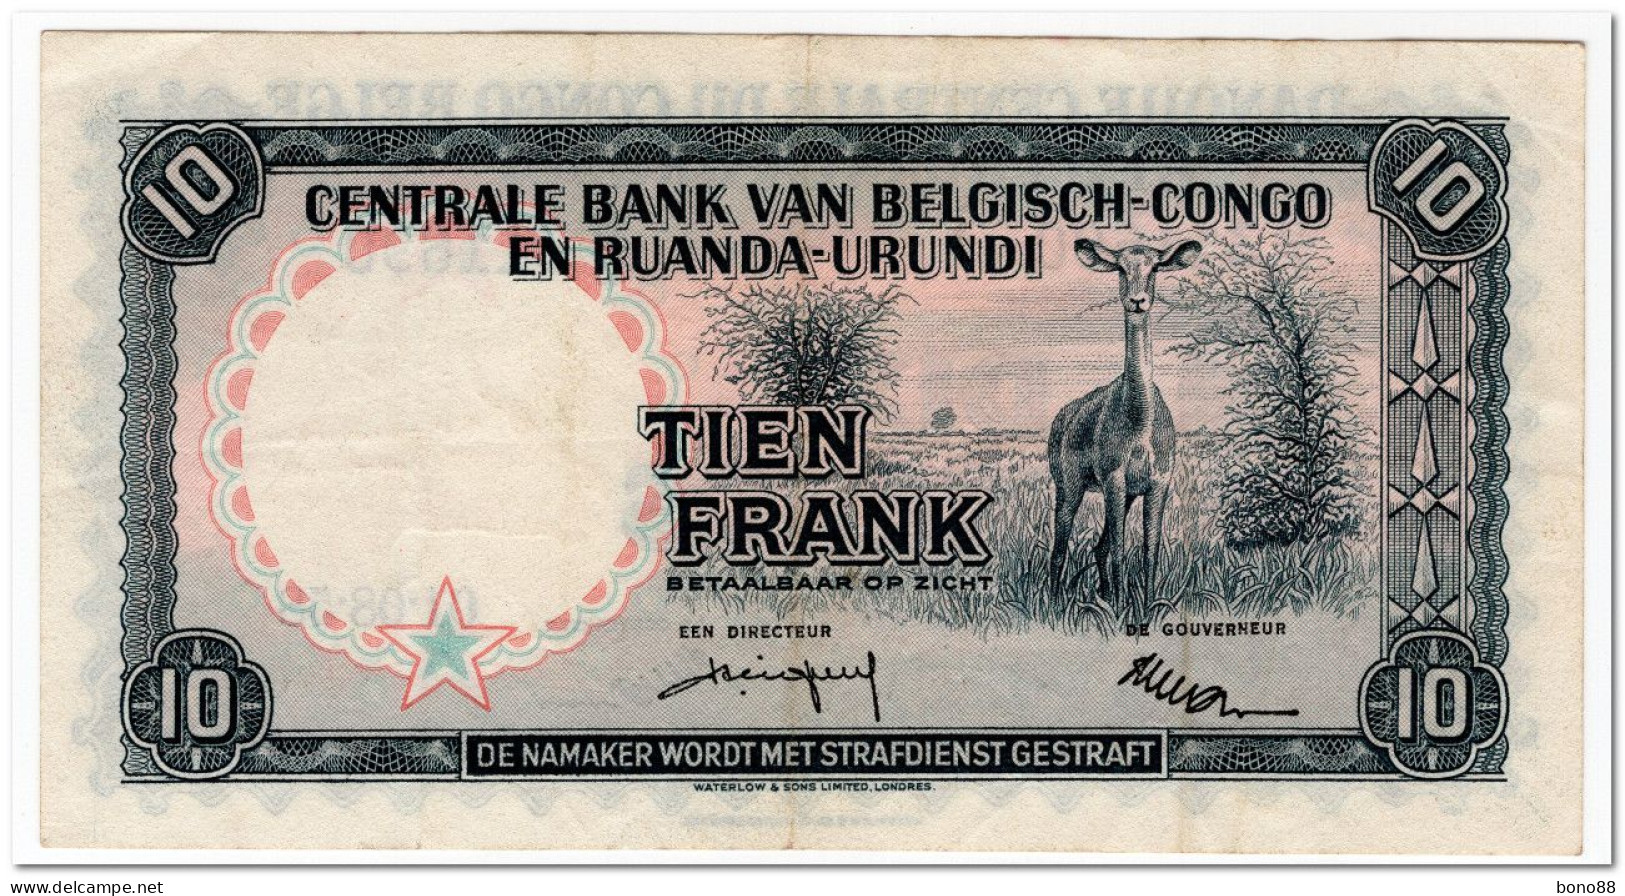 BELGIAN CONGO,10 FRANCS,1958,P.30b,VF+ - Belgian Congo Bank